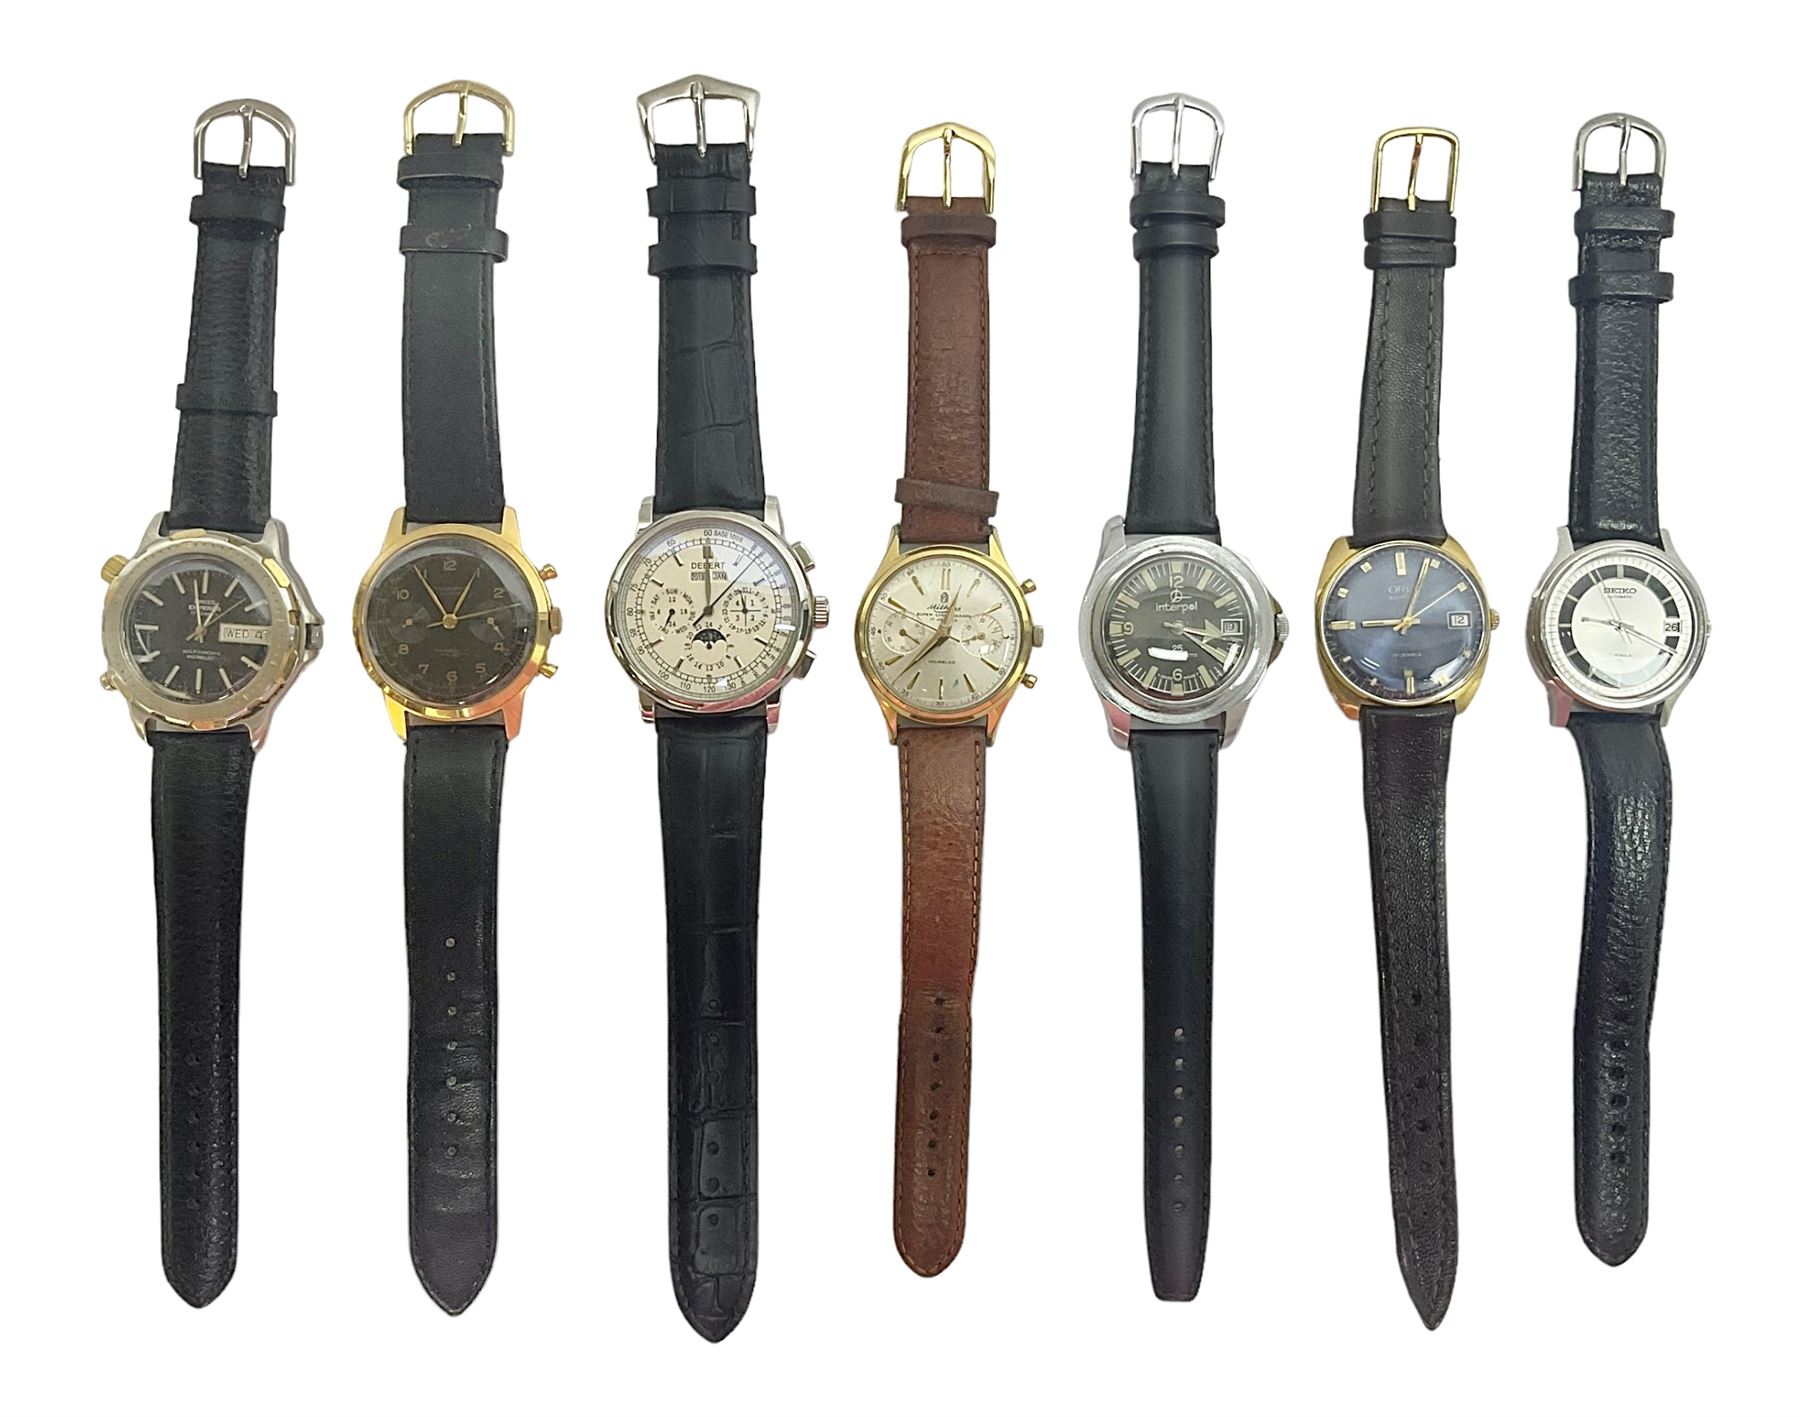 Three automatic wristwatches including Seiko